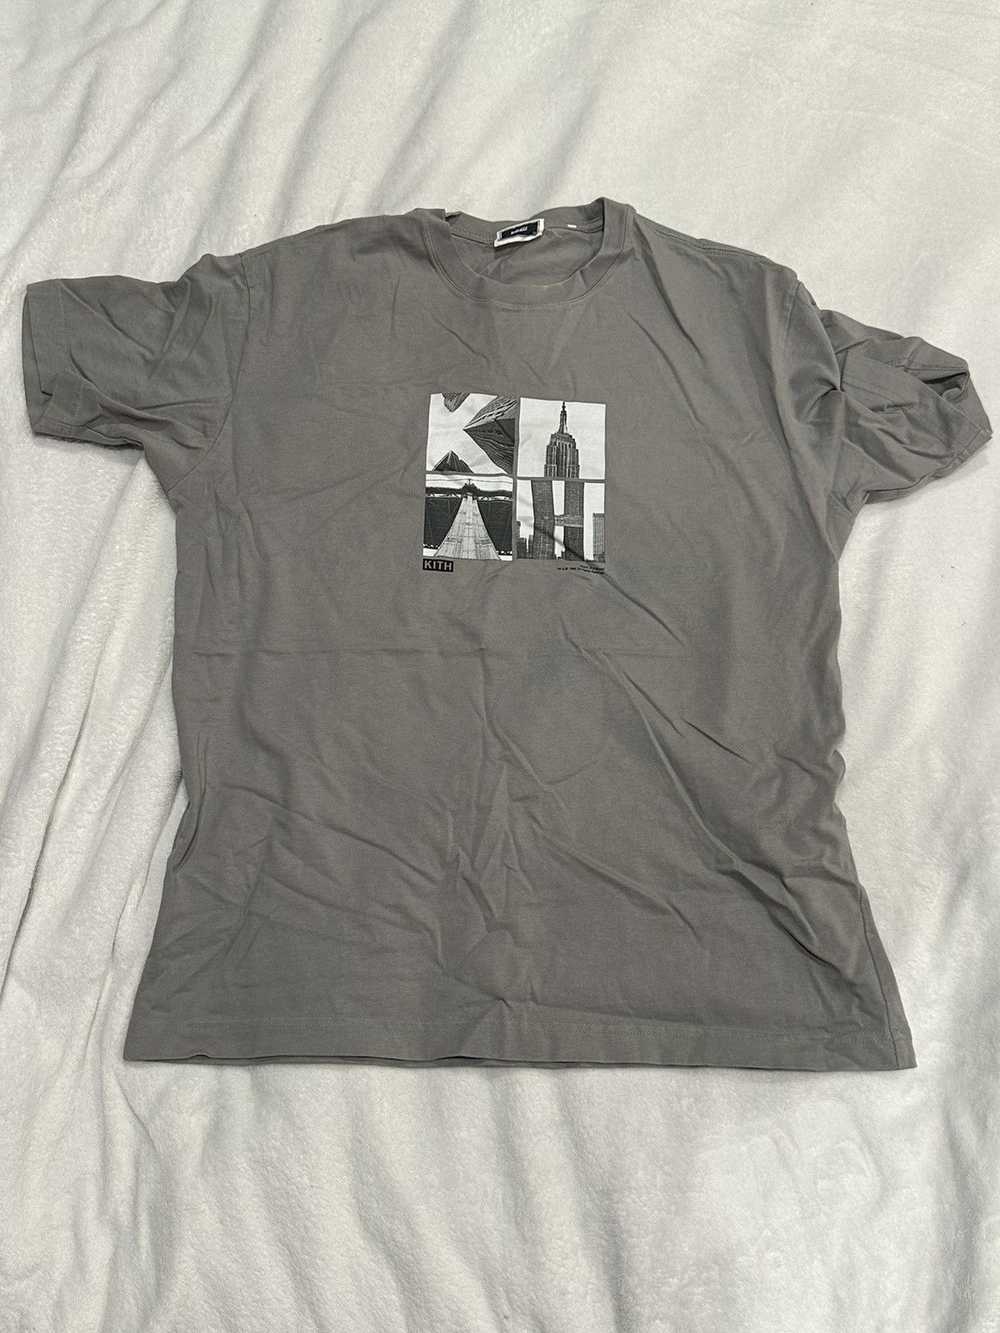 Kith Kith Parts of a Whole NYC T-Shirt - image 1